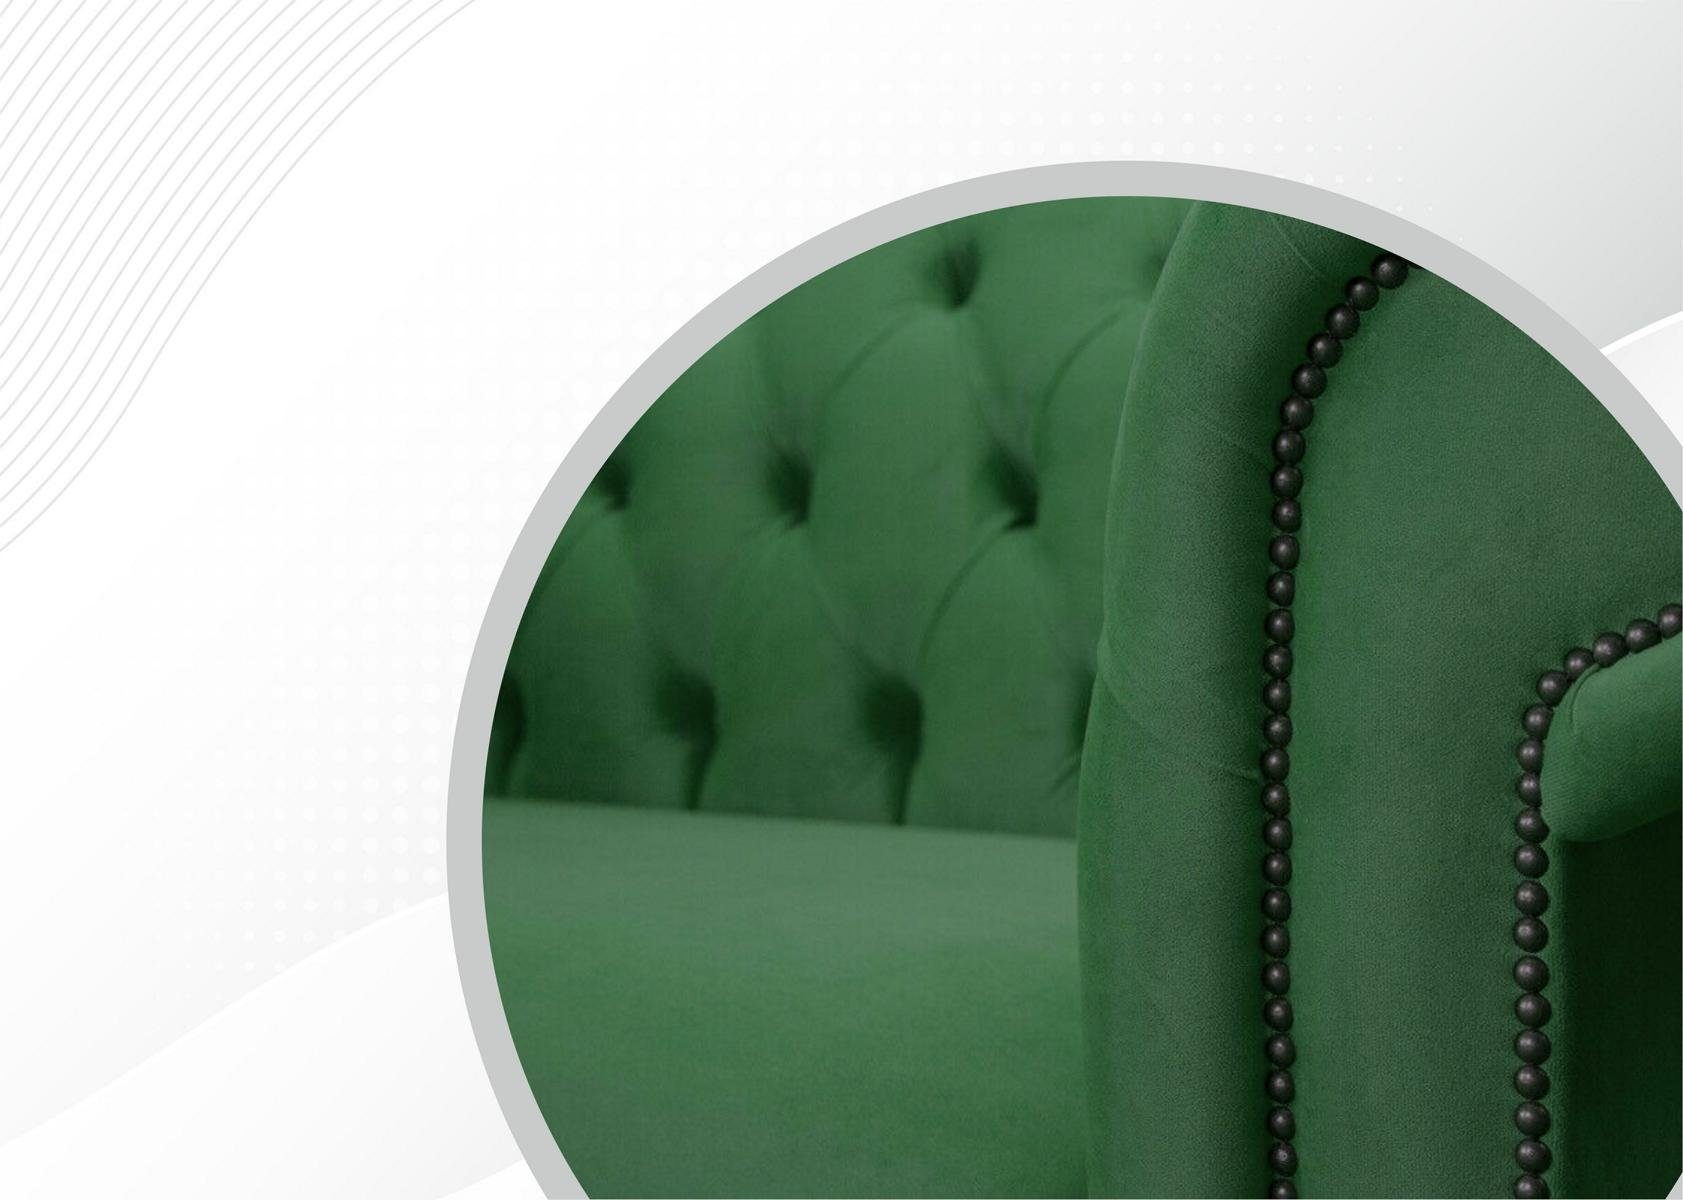 165 2 cm Chesterfield Couch Sofa Chesterfield-Sofa, Sitzer JVmoebel Design